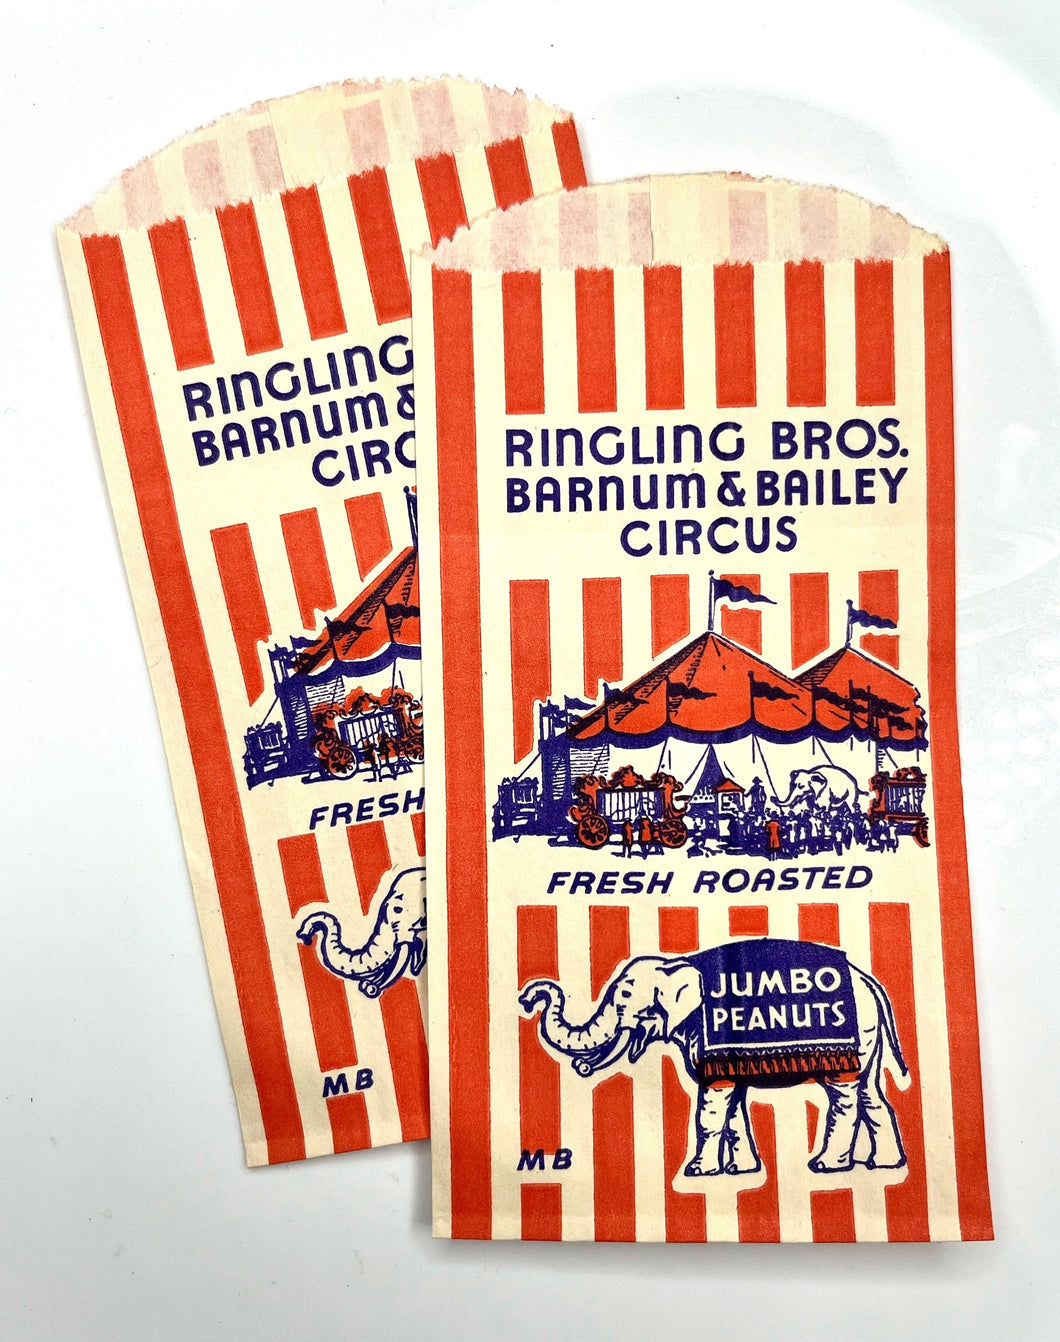 (2) Barnum & Bailey circus peanut bags